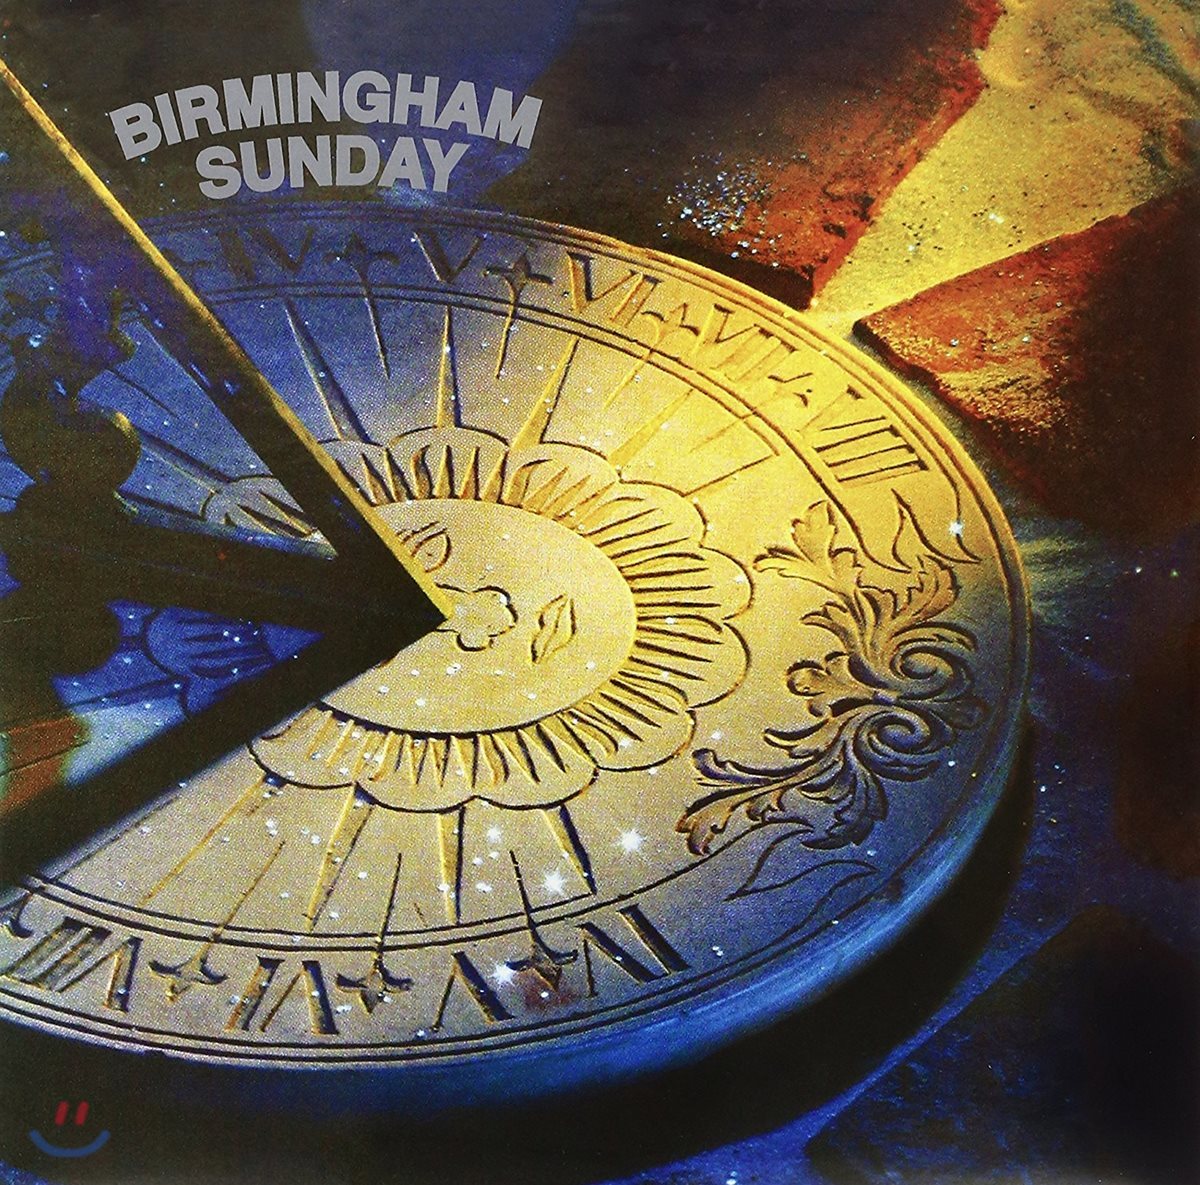 Birmingham Sunday (버밍엄 선데이) - A Message From Birmingham Sunday [LP]